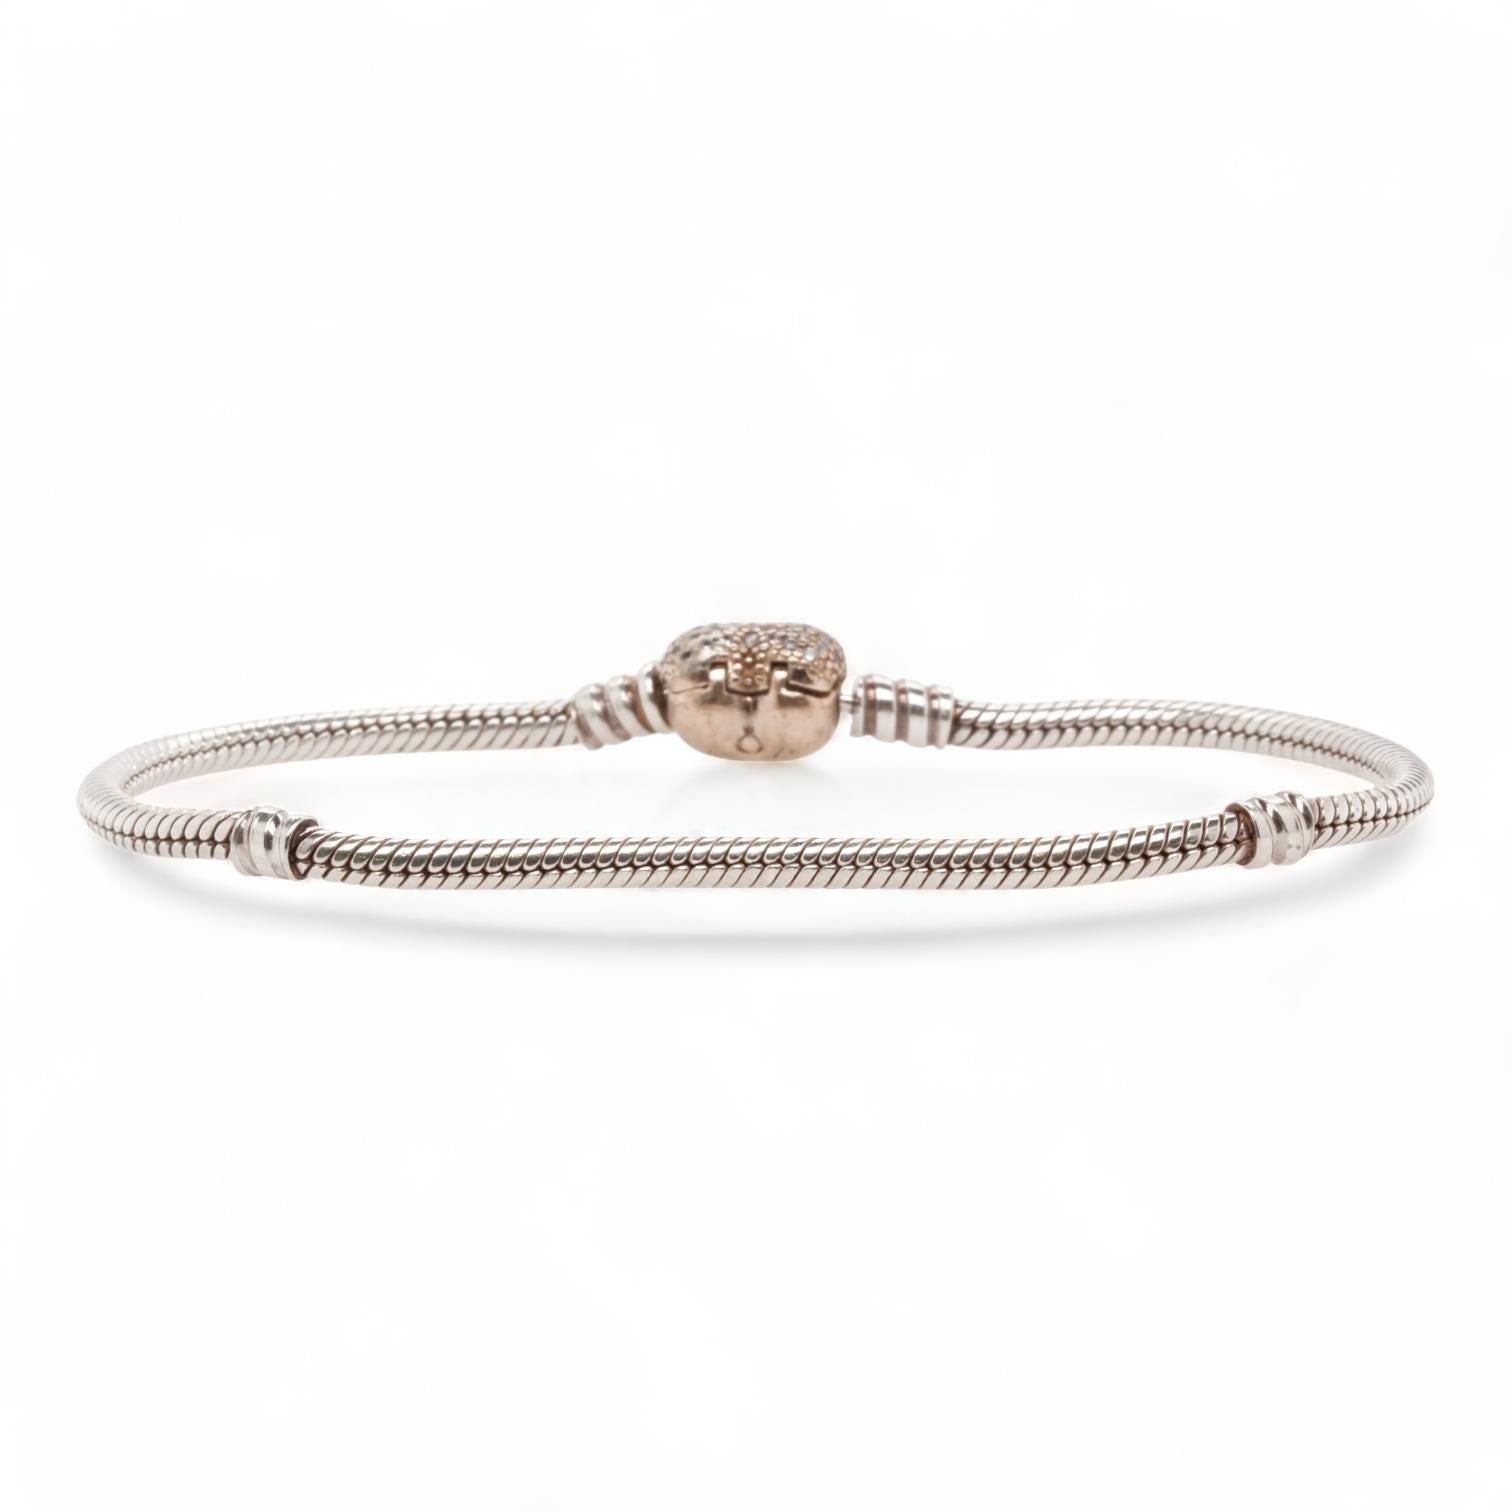 Pandora Moments Sparkling Heart Clasp Snake Chain Bracelet  Pandora  bracelet designs, Pandora bracelet charms, Pandora chain bracelet